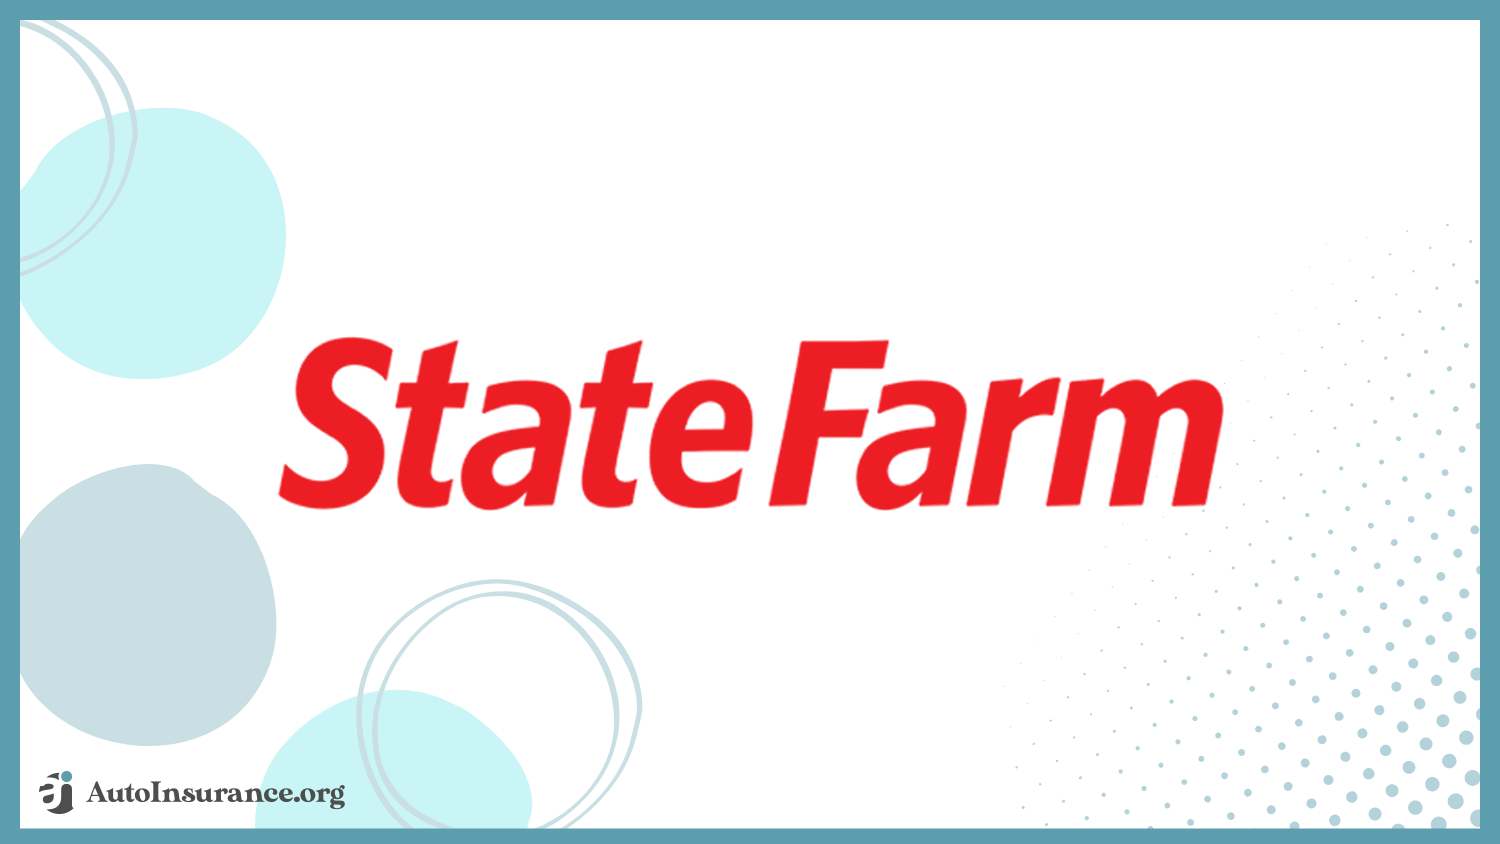 State Farm: Best Comprehensive Auto Insurance Companies